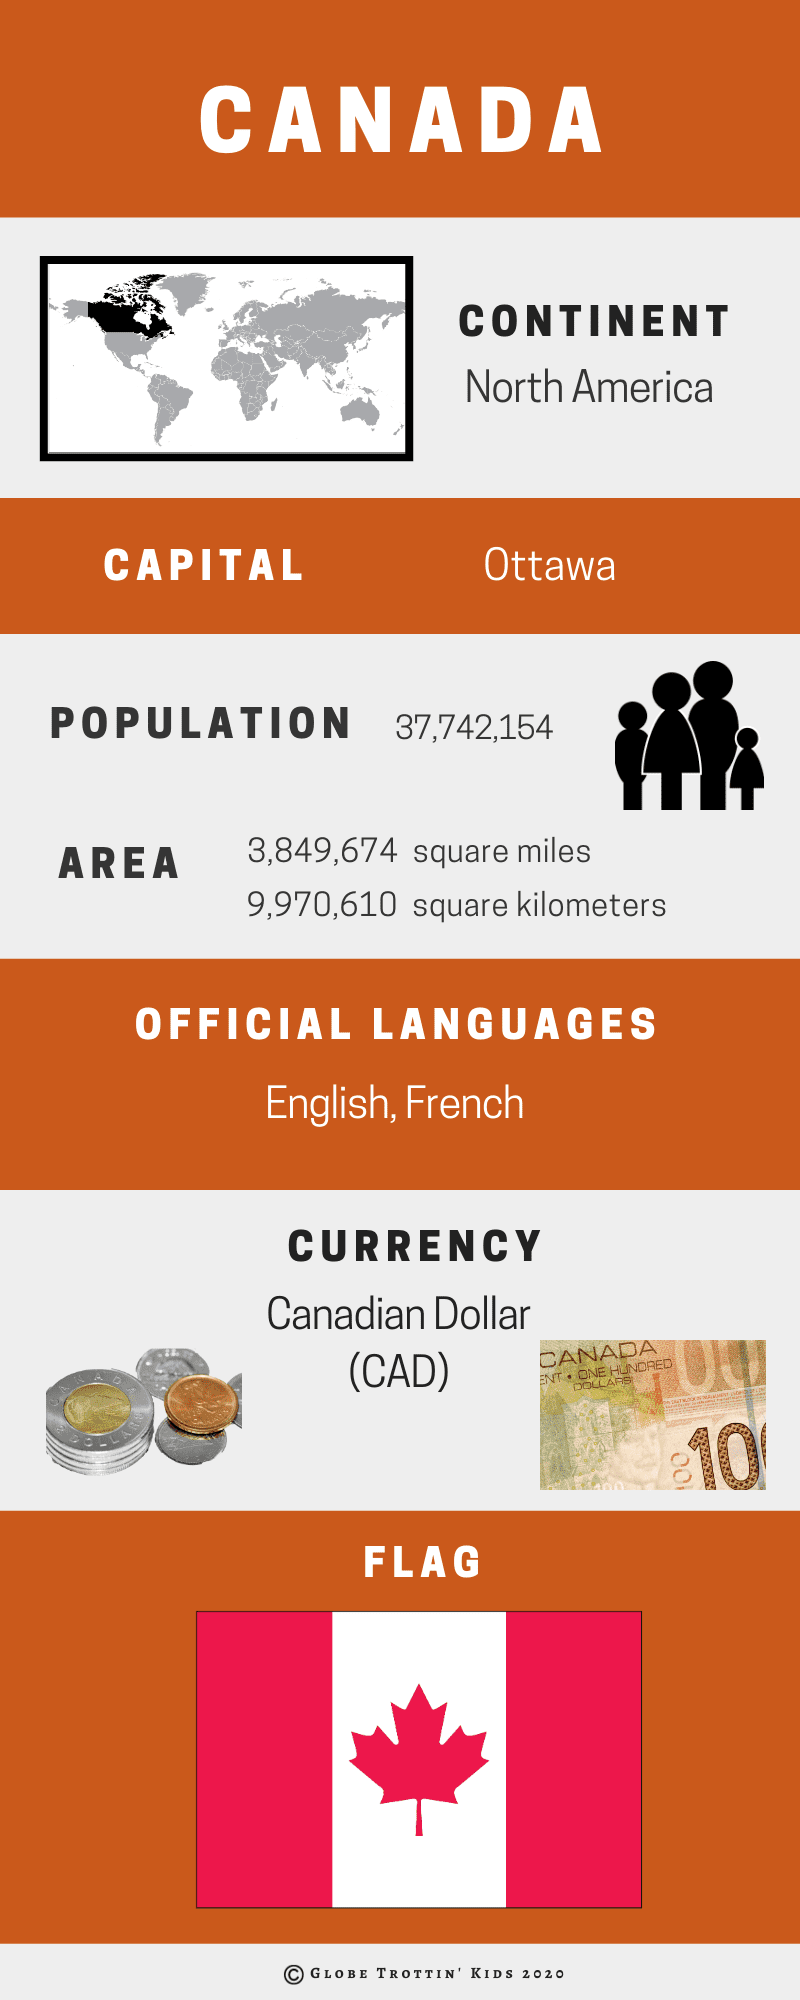 Canada Infographic